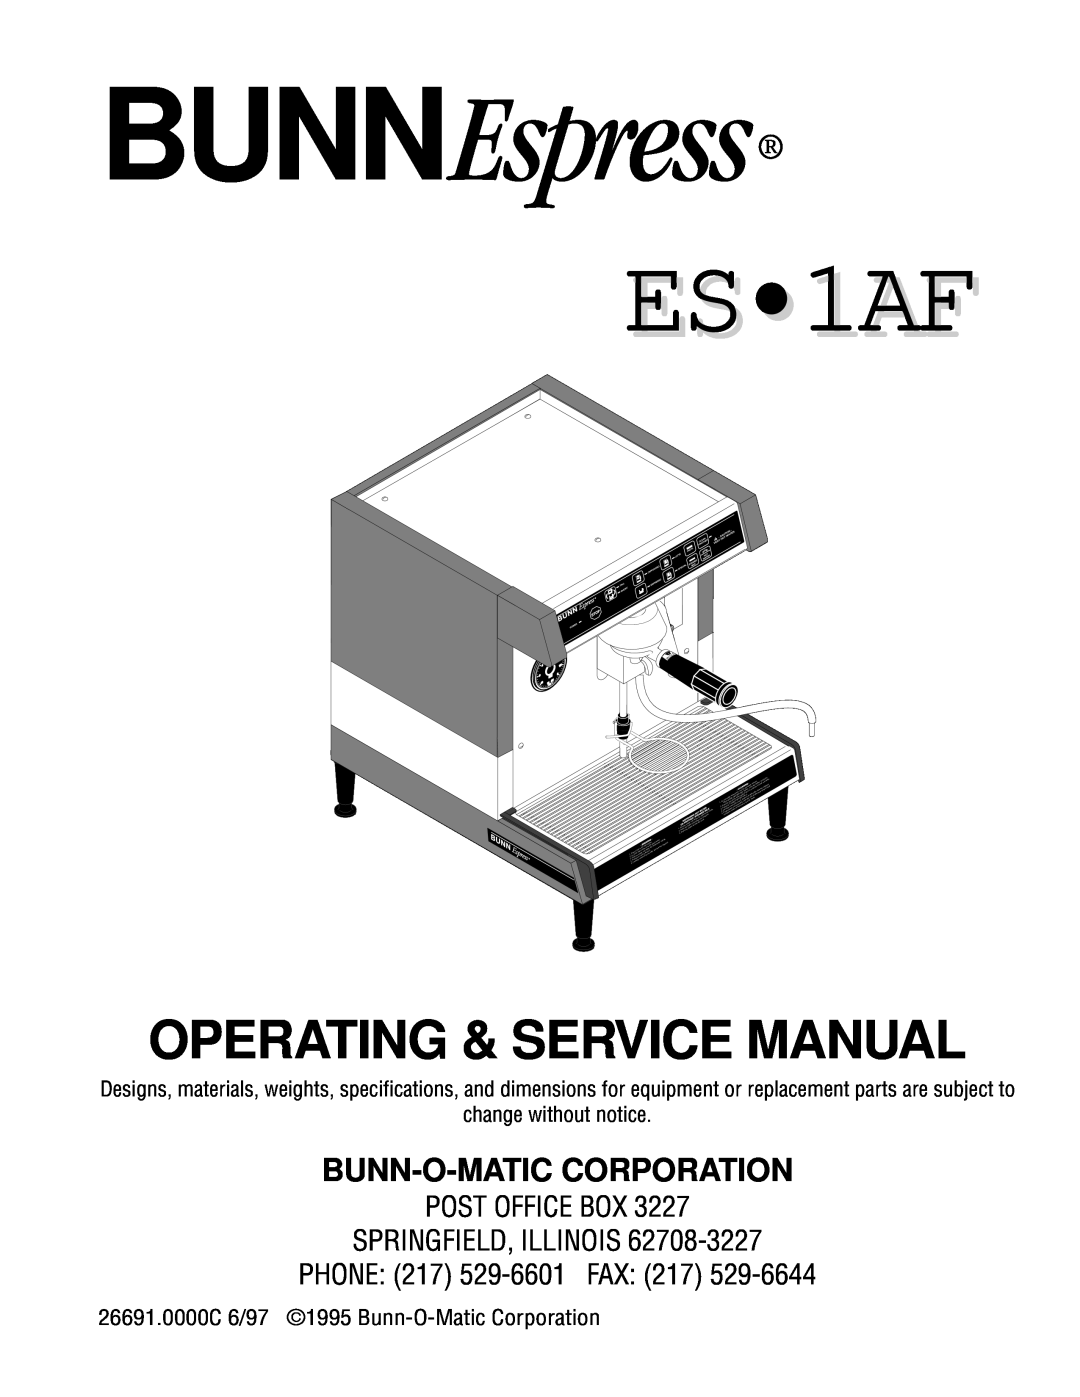 Bunn ES.1AF service manual Bunn-O-Maticcorporation, BUNNEspress, ES1AF, Post Office Box Springfield, Illinois 